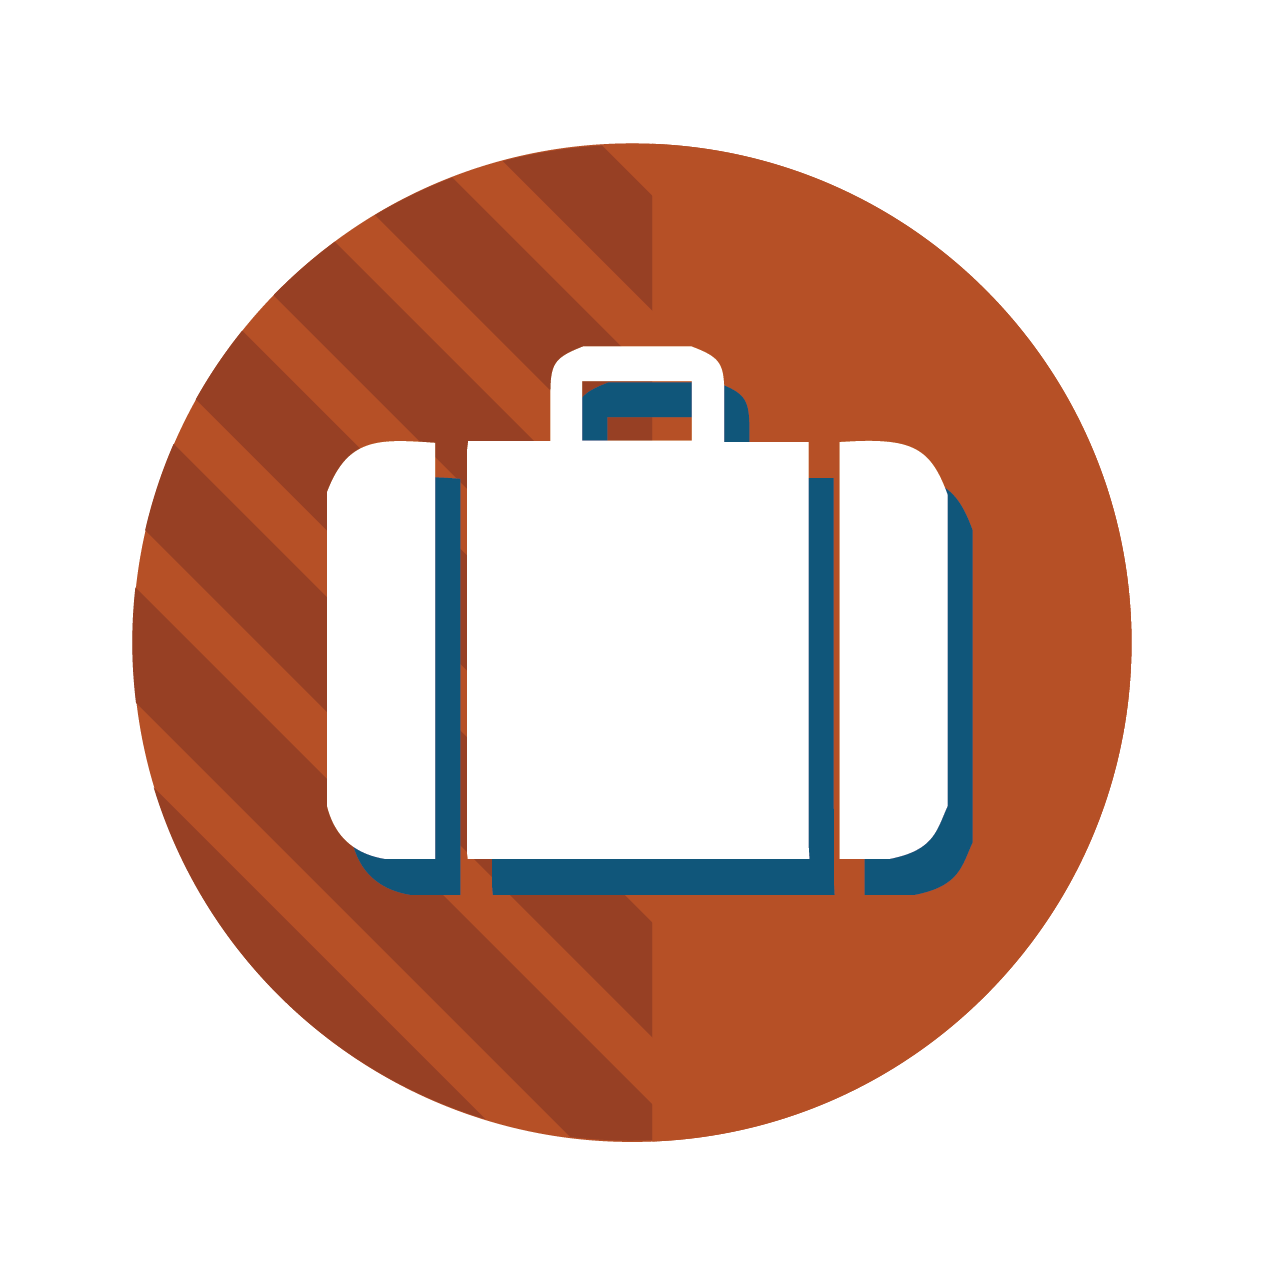 Company List icon of a briefcase in a orange circle